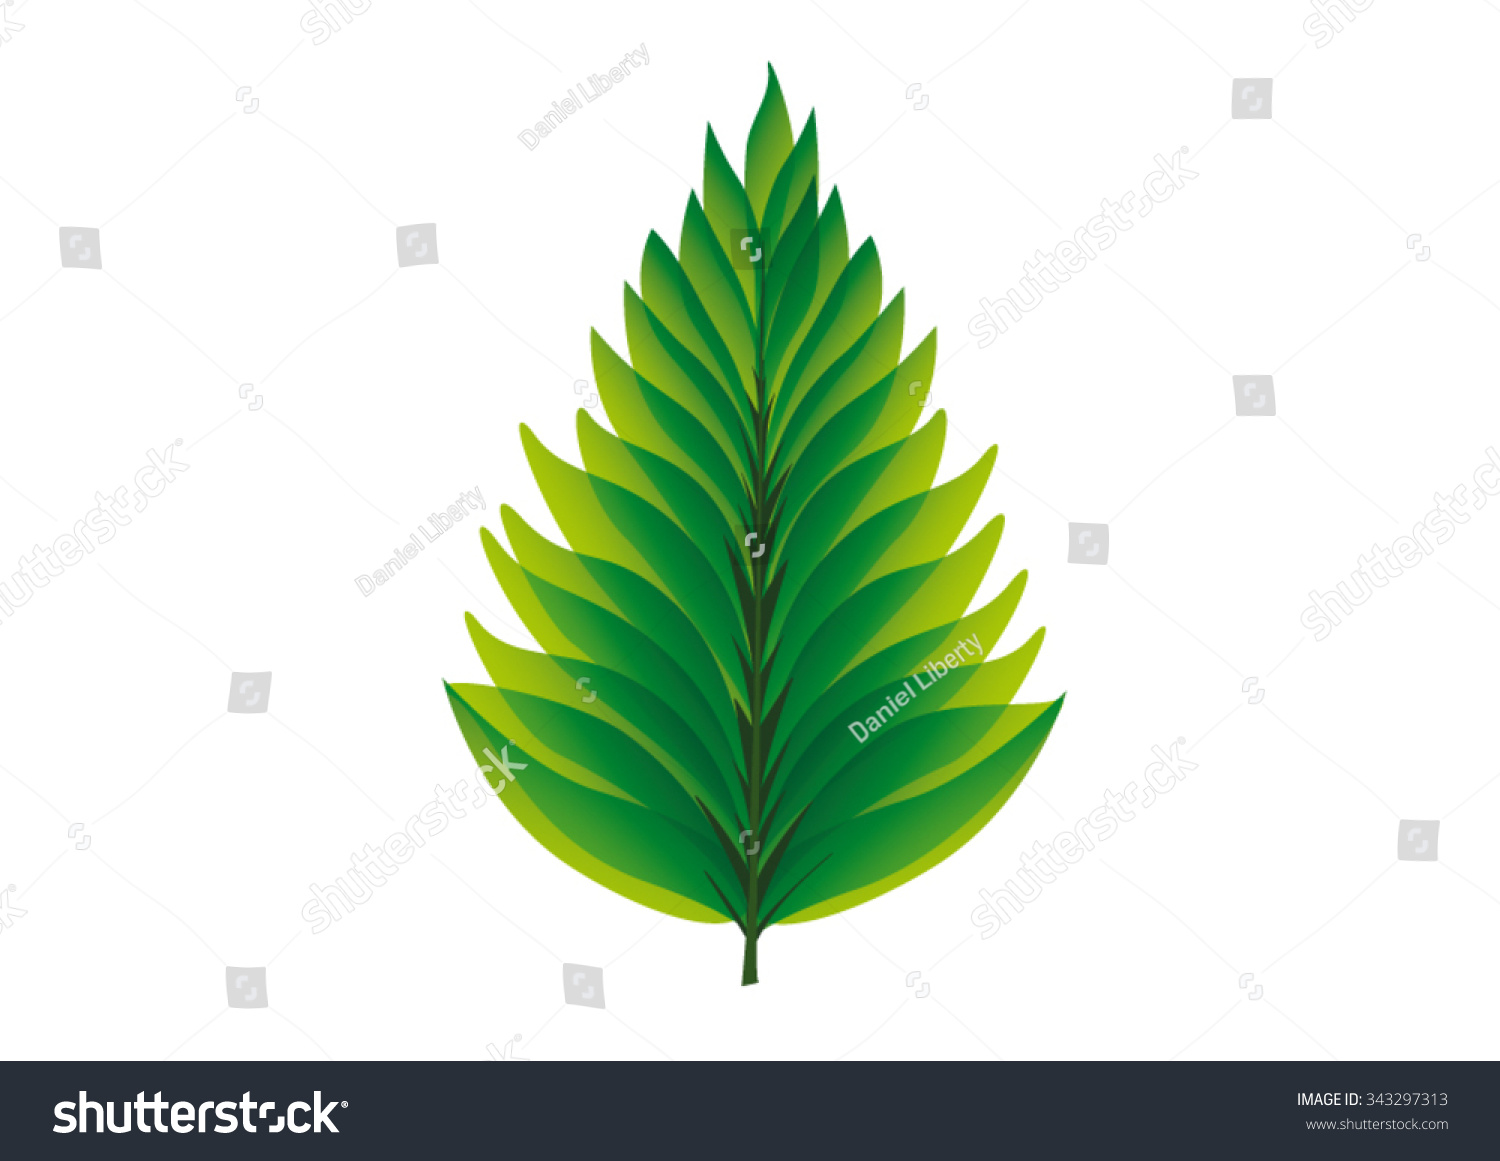 Leaf Of Tree Stock Vector Illustration 343297313 : Shutterstock